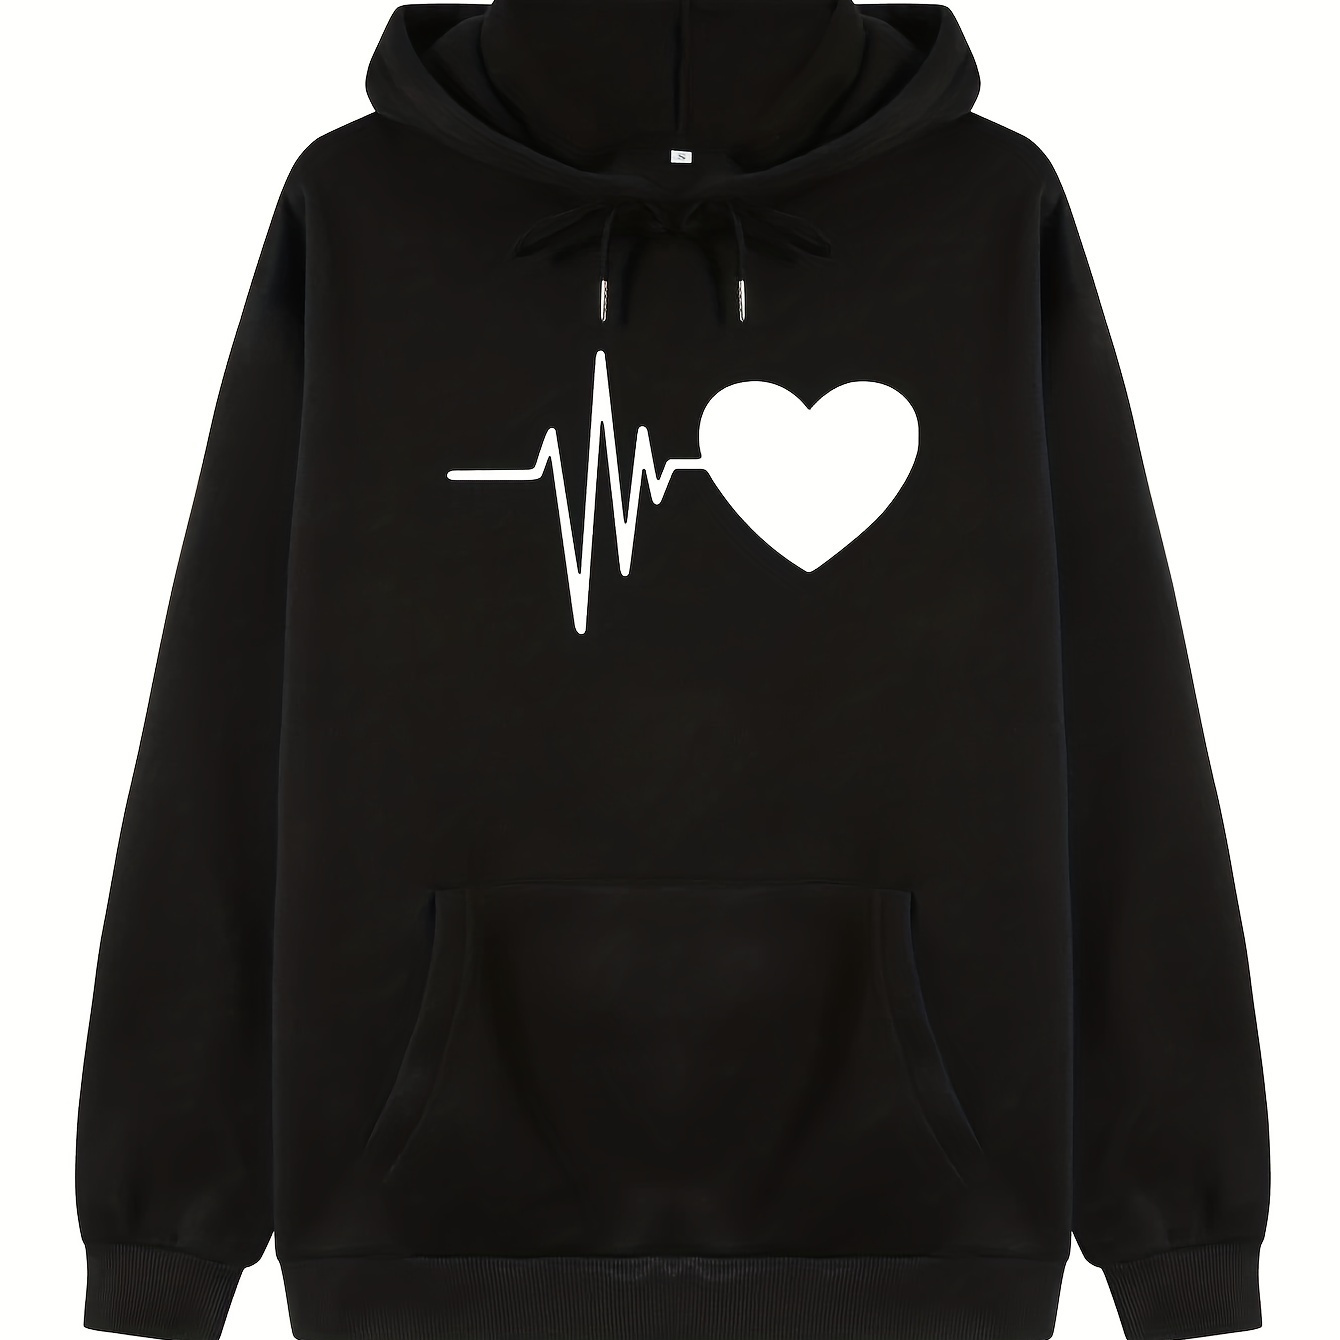 

Heart Rate Print Drawstring Hoodies, Casual Long Sleeve Kangaroo Pocket Sweatshirt, Women's Clothing